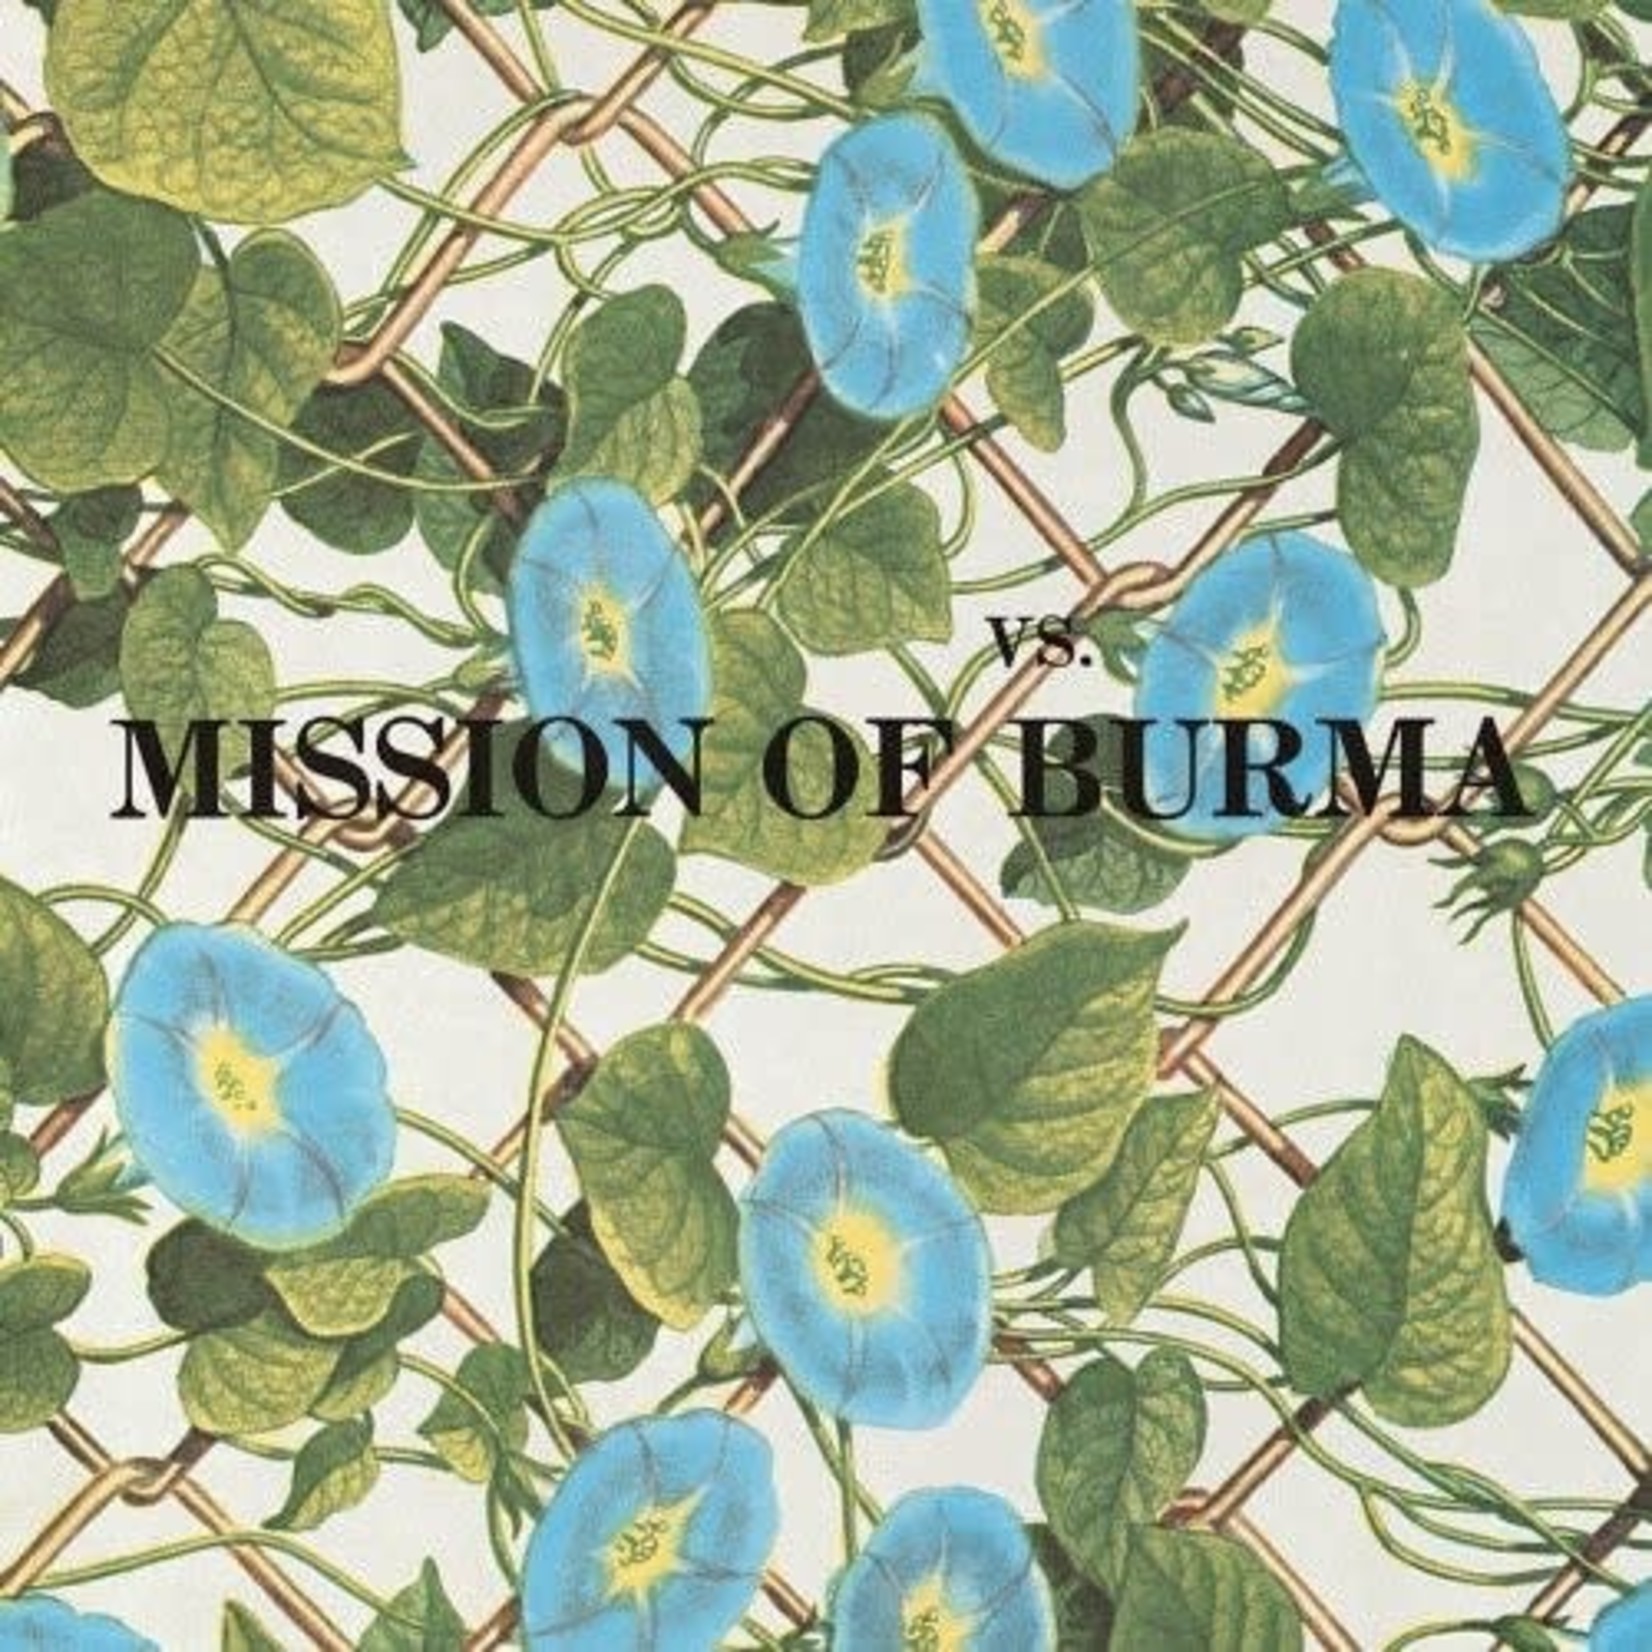 Mission Of Burma - Vs. [LP]